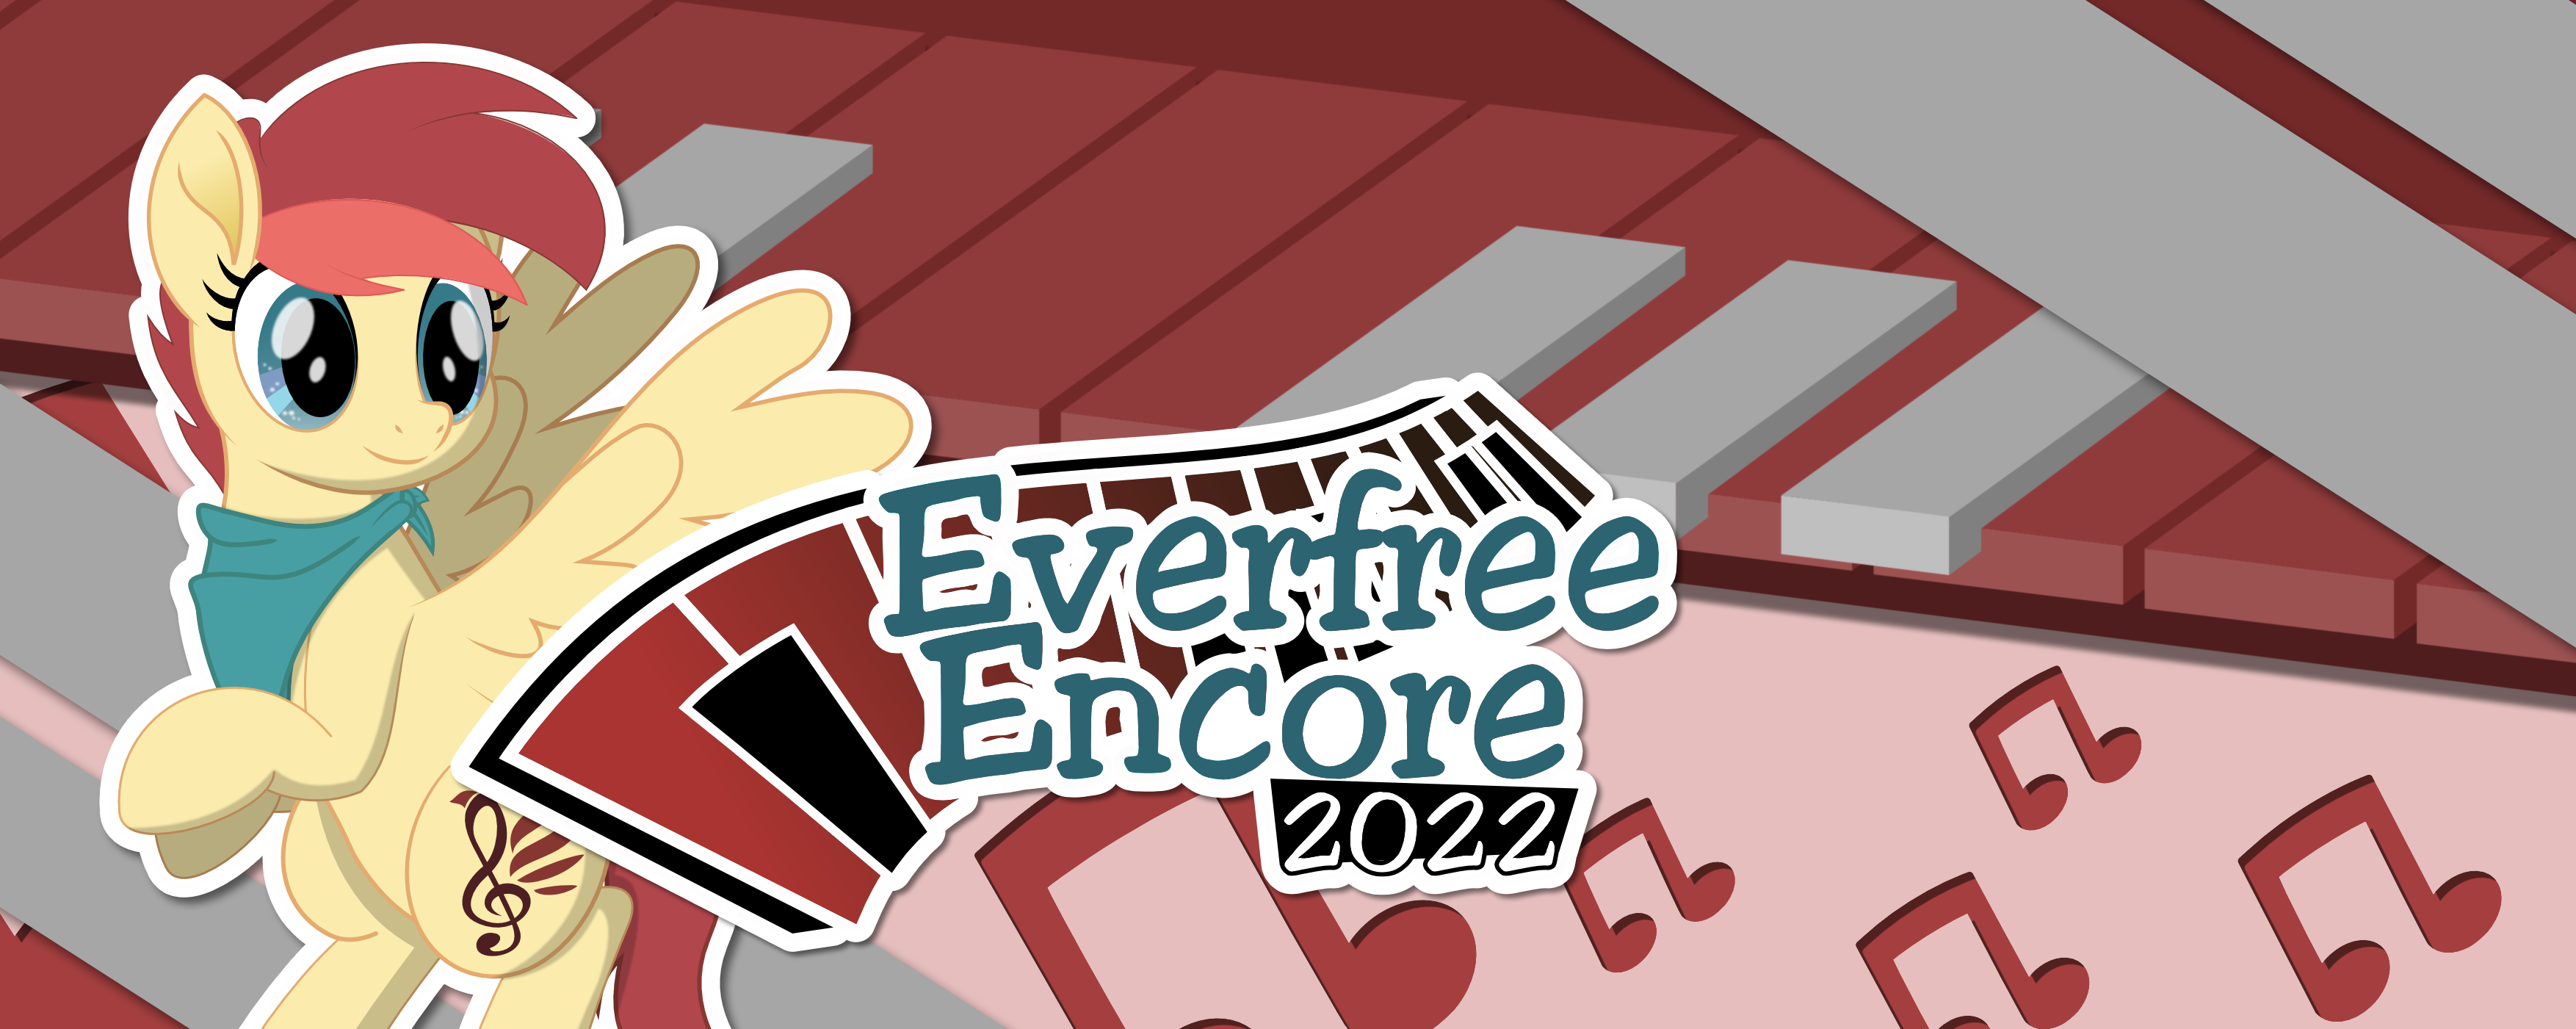 Everfree Encore 2022